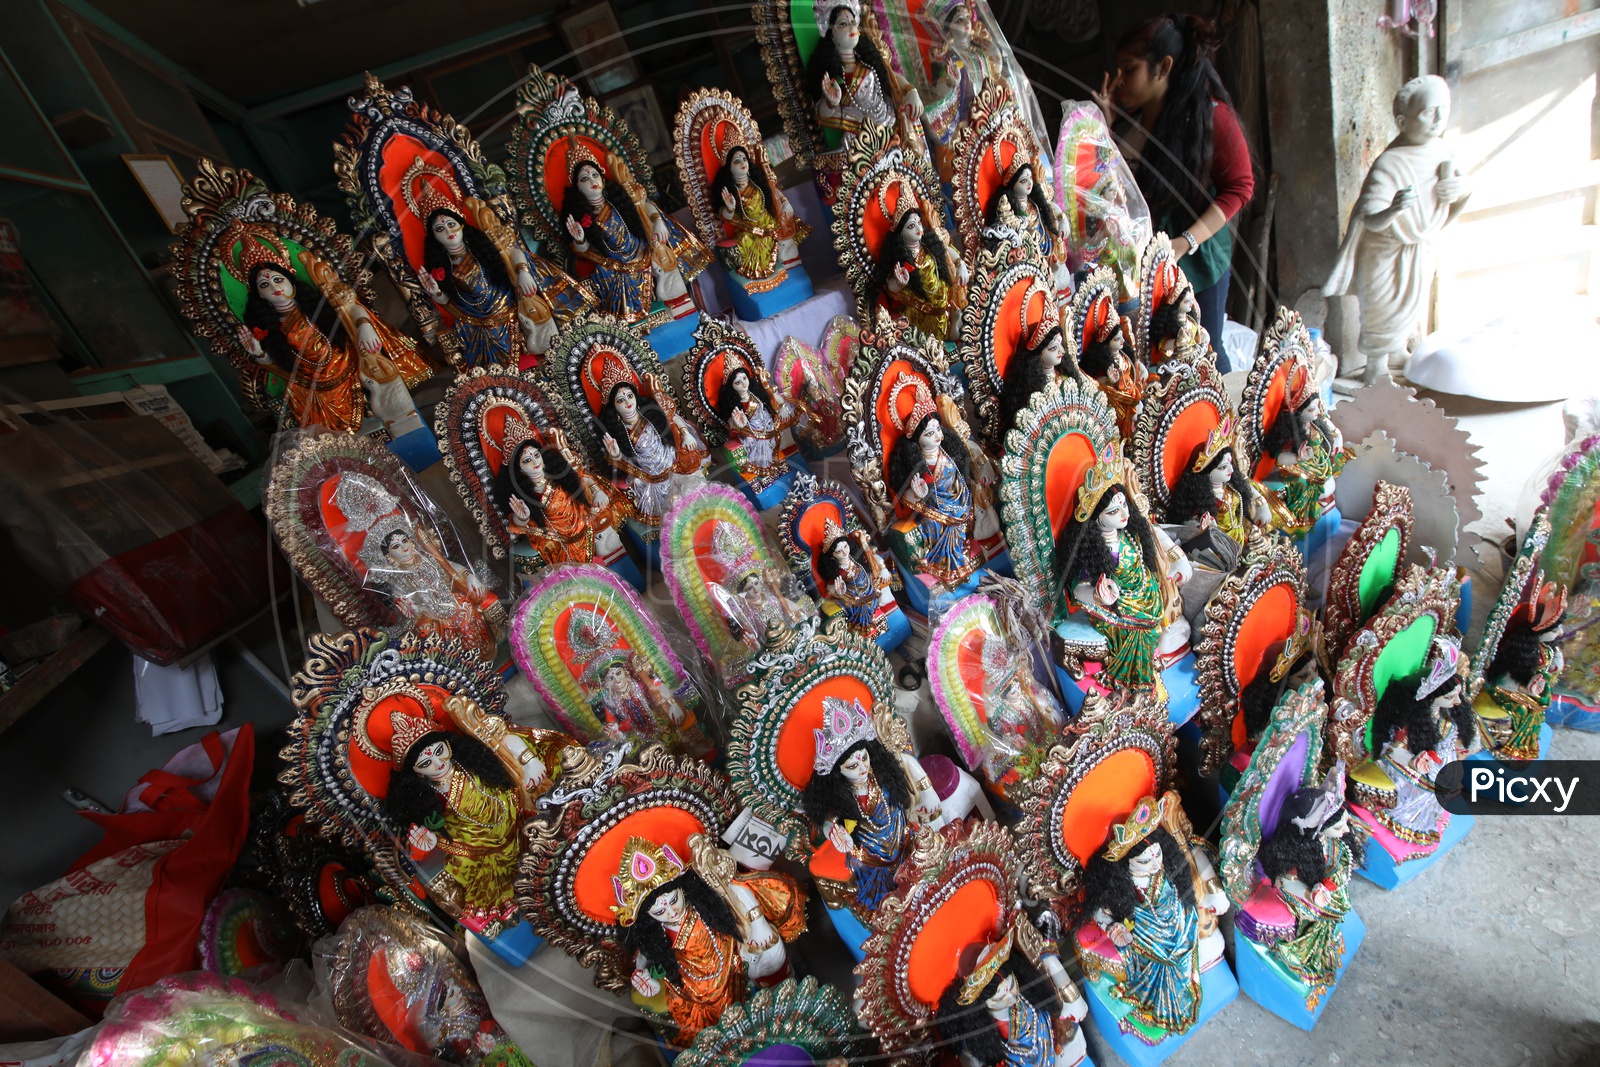 Goddess Durga Mata idols For Sale In a Vendor Stall